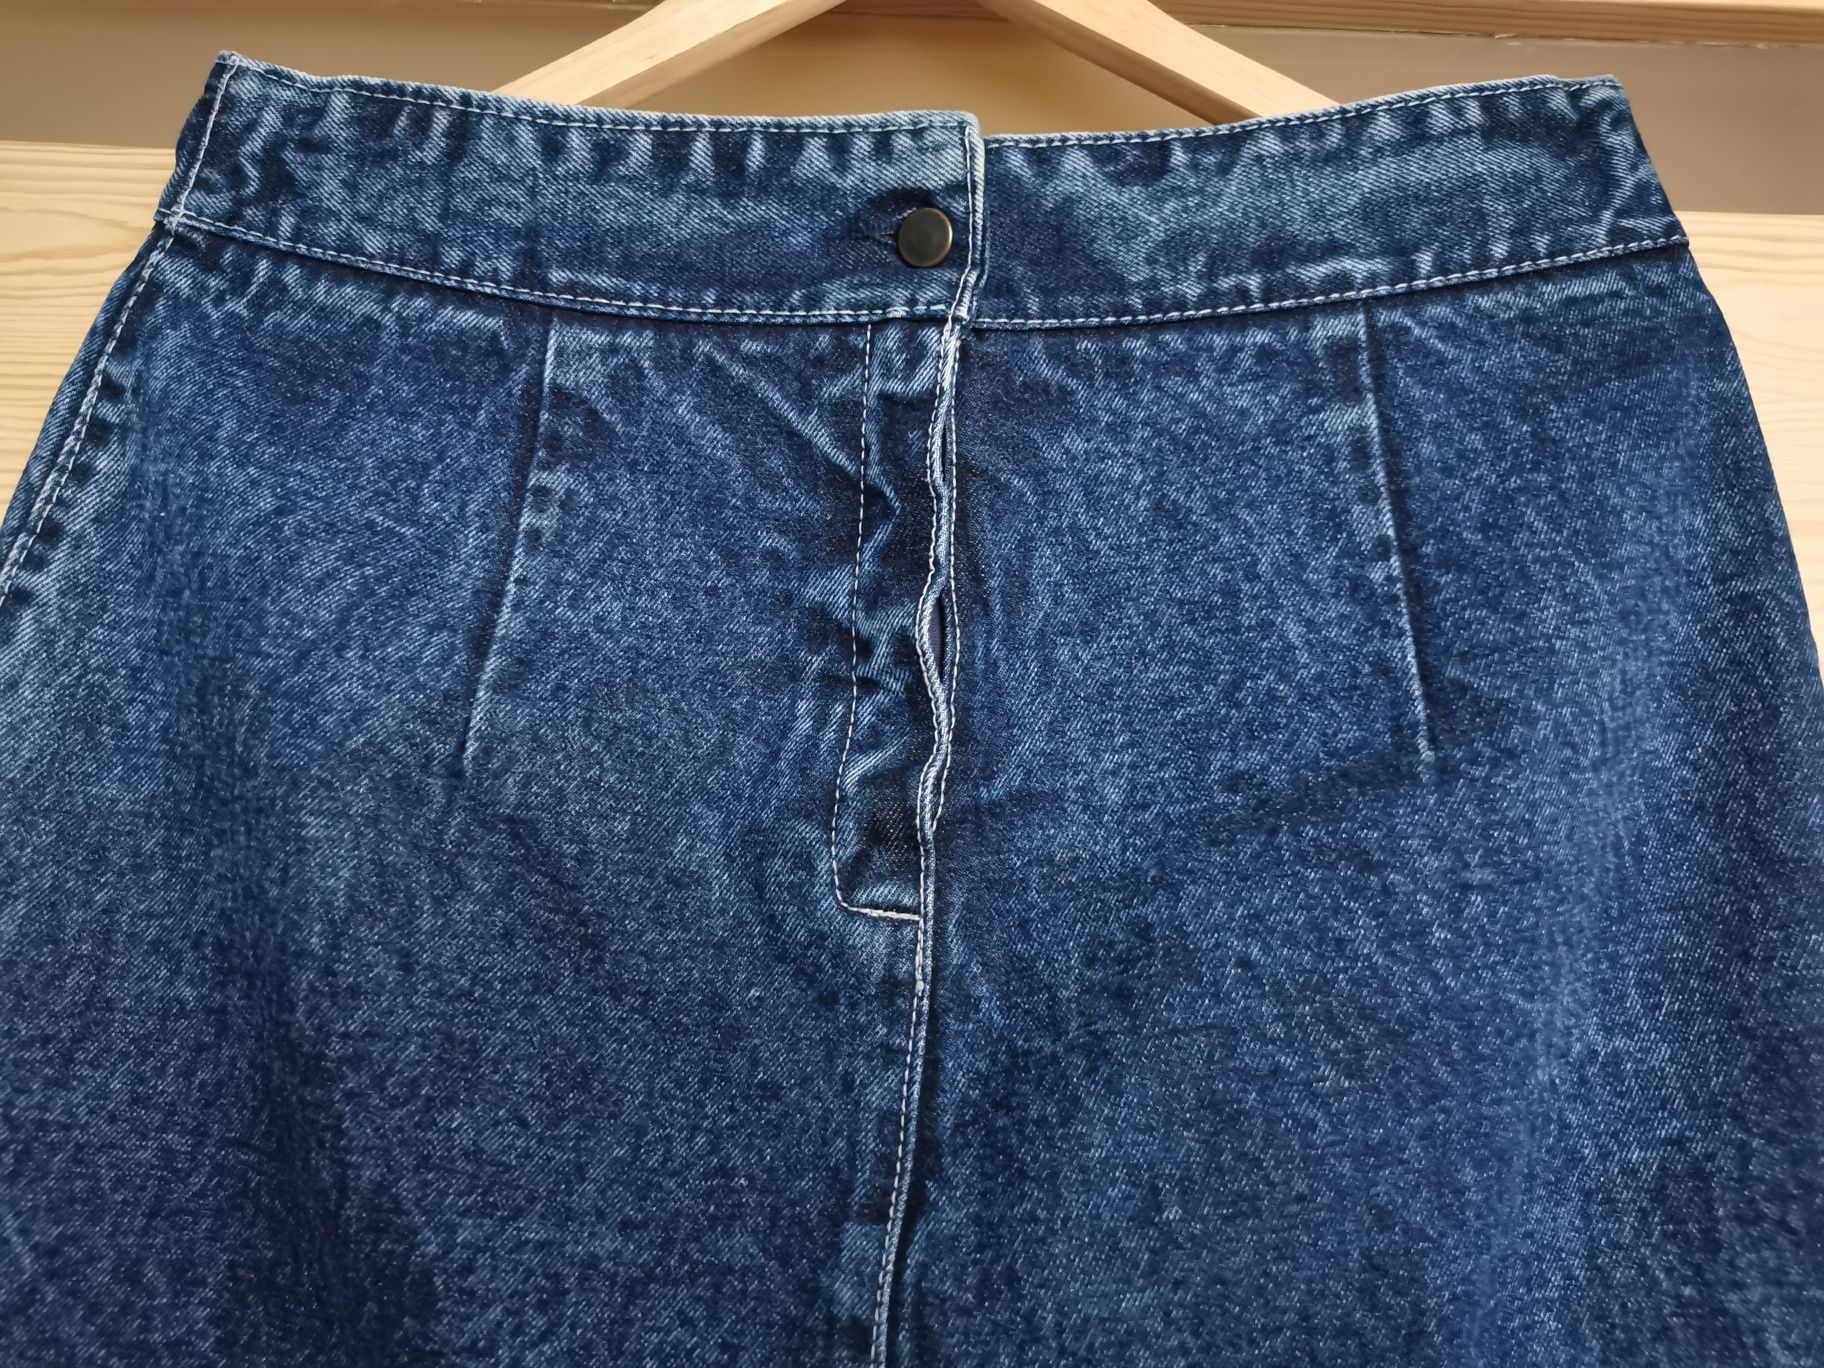 Jeansowa haftowana spódnica L/XL